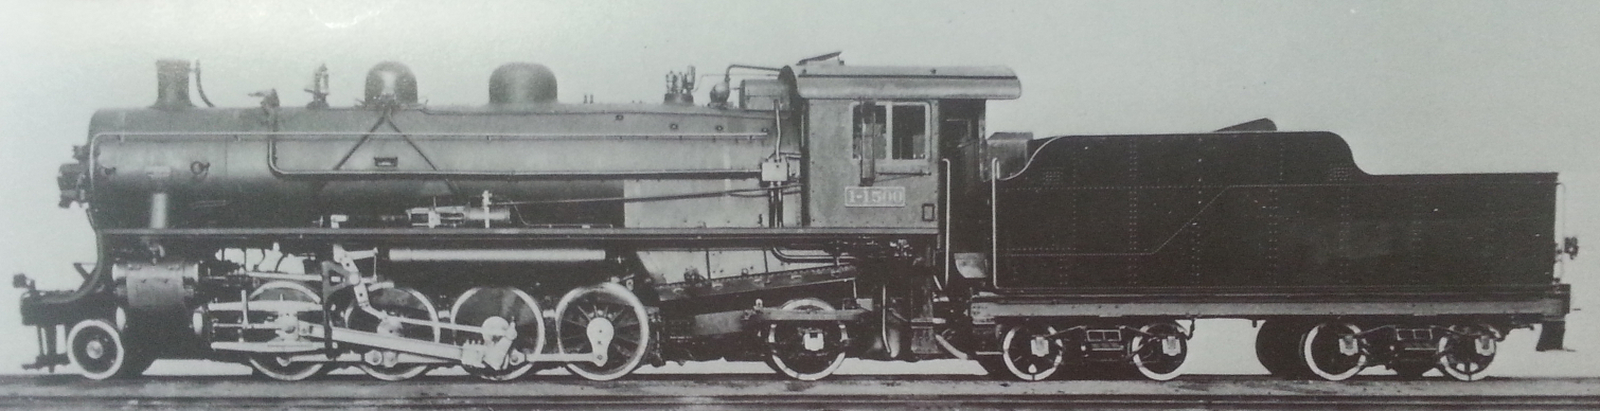 Manchukuo Mikai No. 1-1500, later China Railway JF1 501